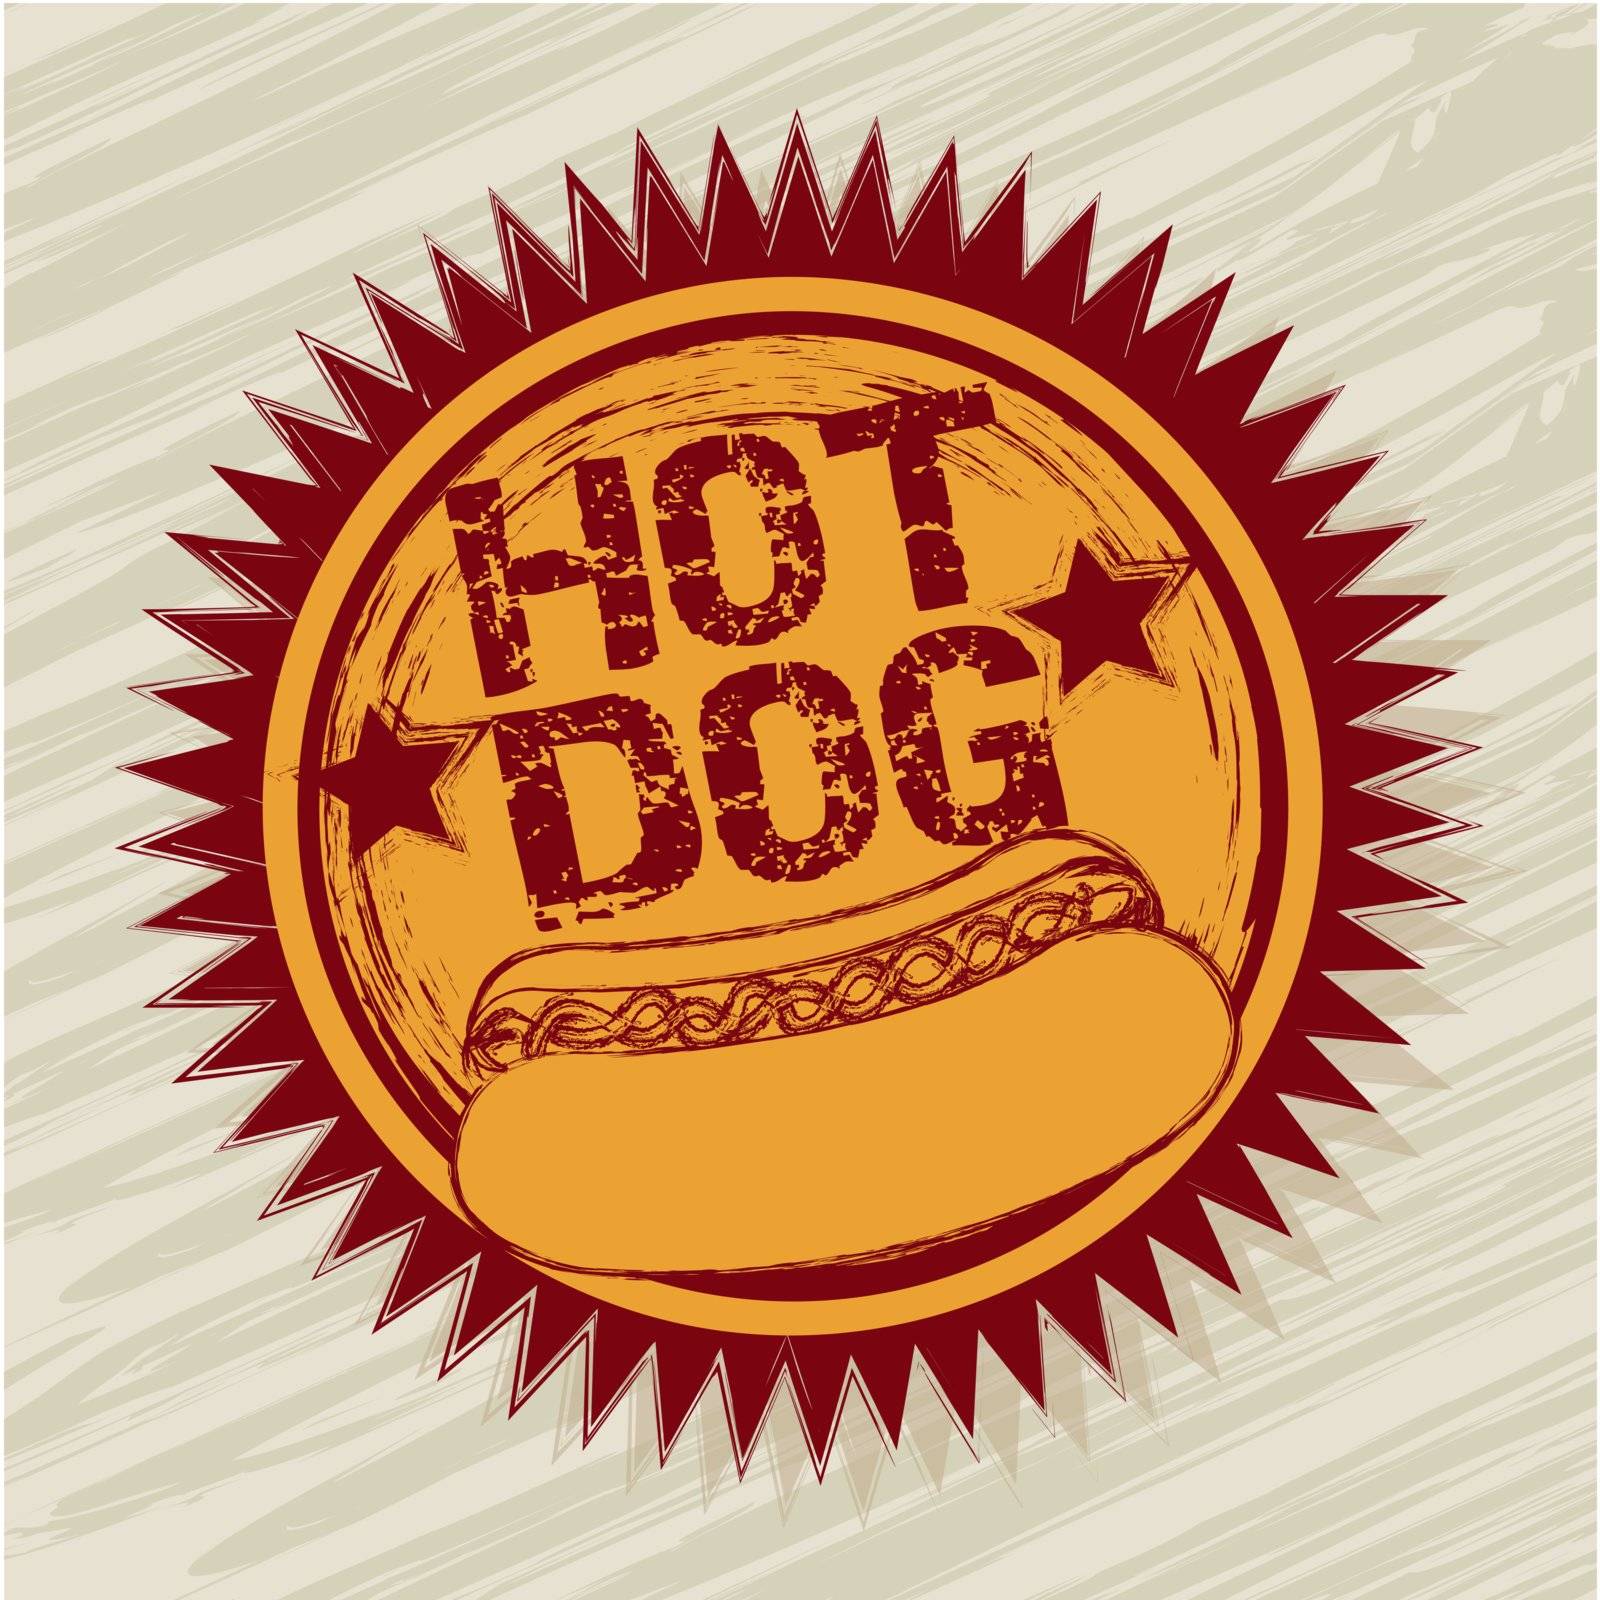 hot dog by yupiramos